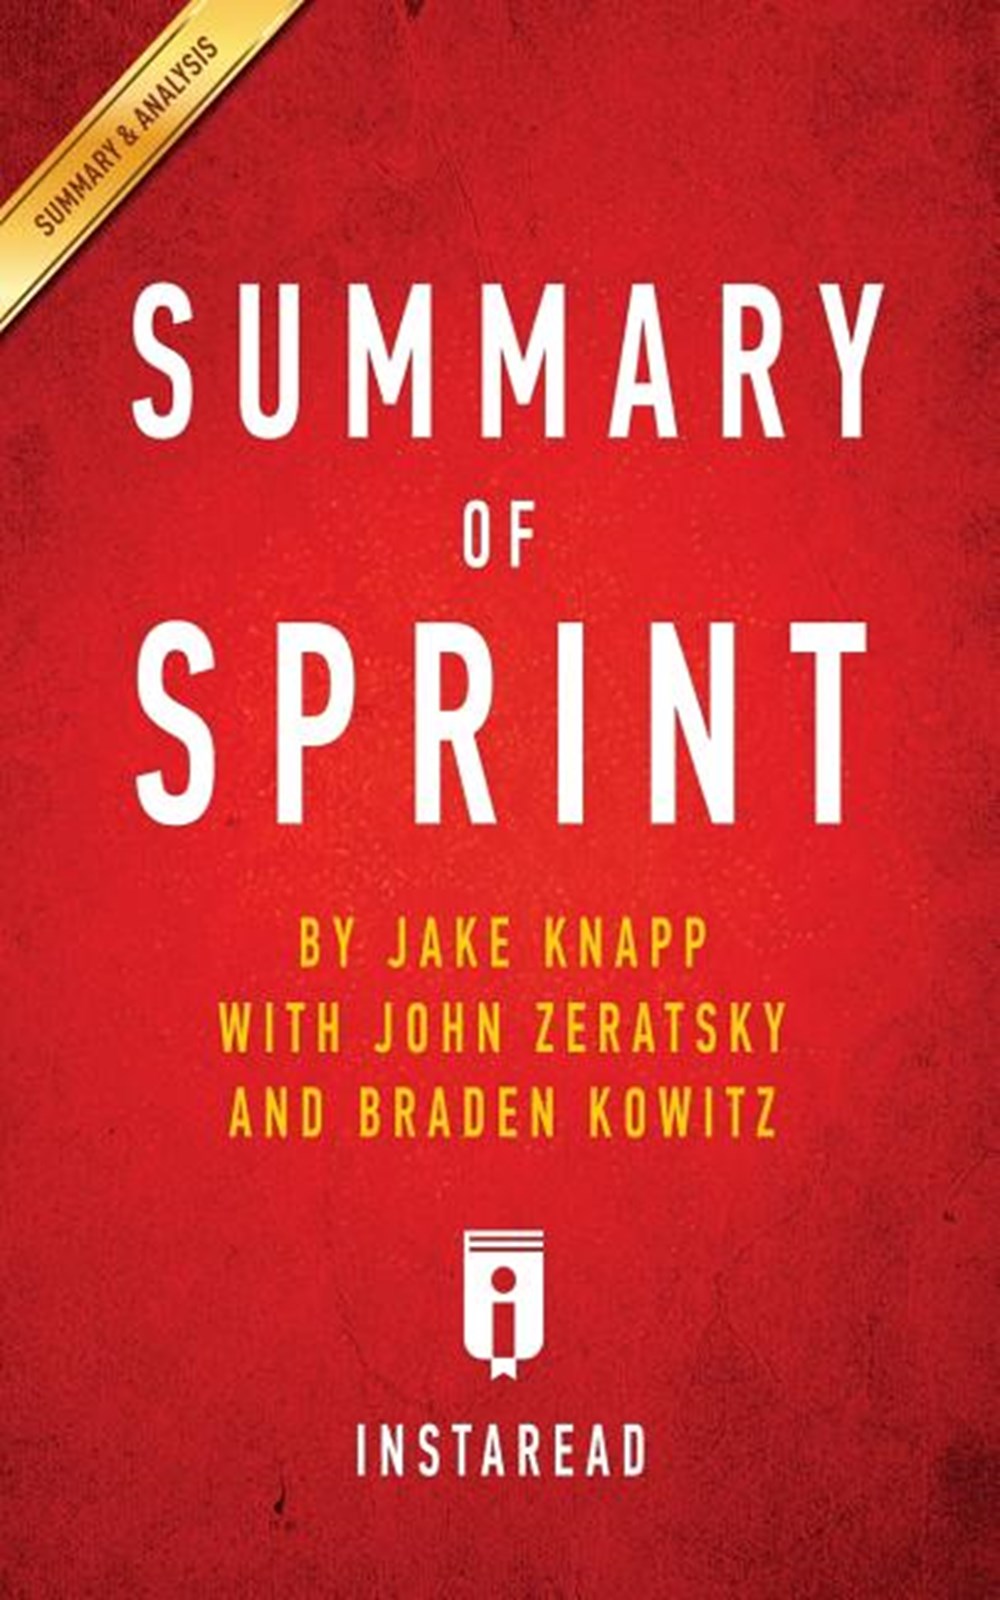 Summary of Sprint by Jake Knapp with John Zeratsky and Braden Kowitz - Includes Analysis